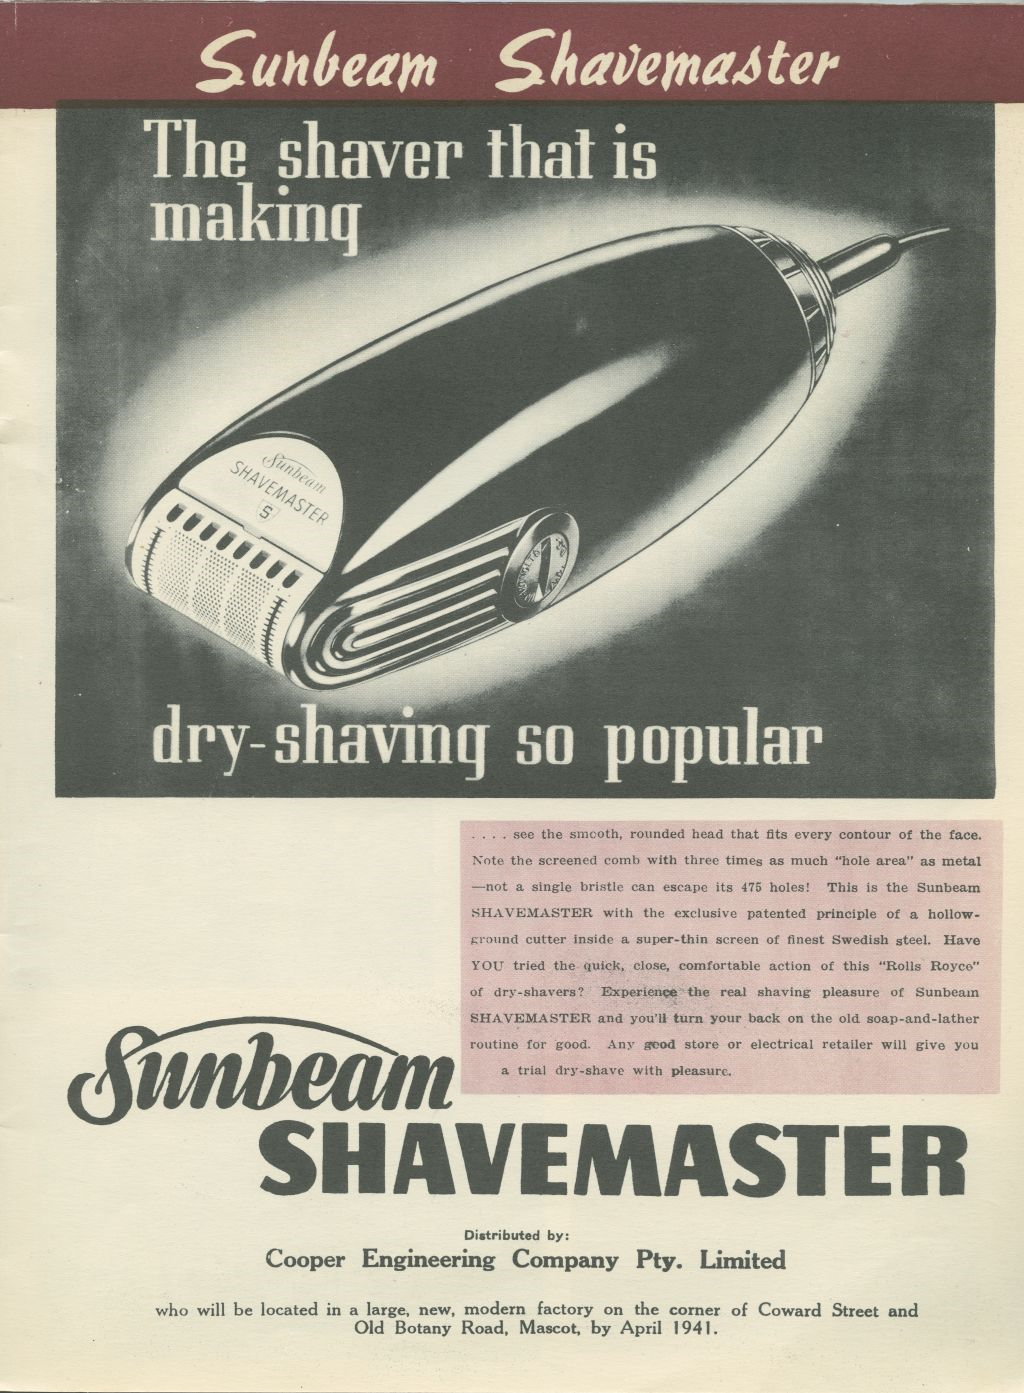 historical poster advertising a men's shaver